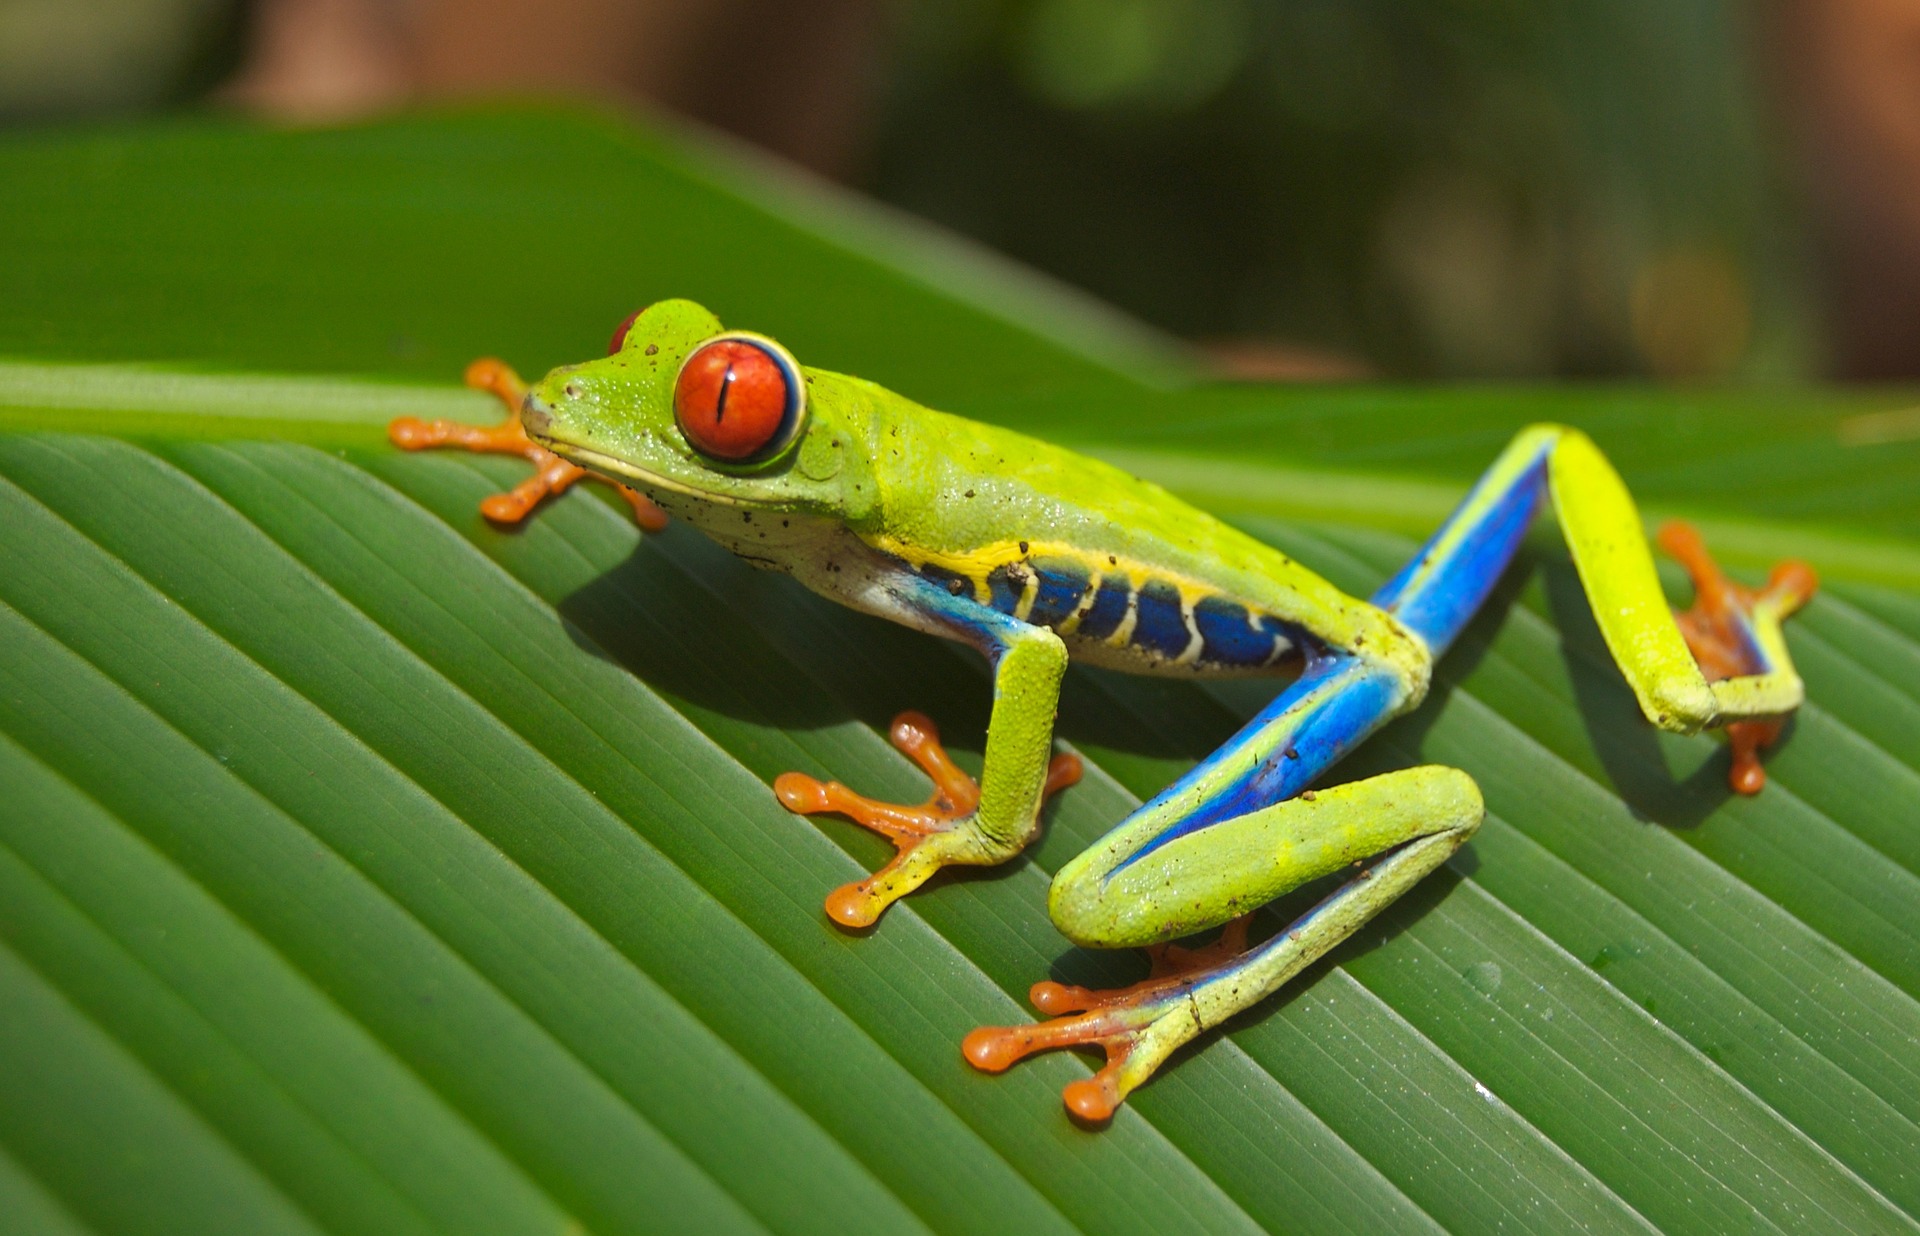 Je bekijkt nu Ecotoerisme in Het Midden-Amerikaanse Land Costa Rica